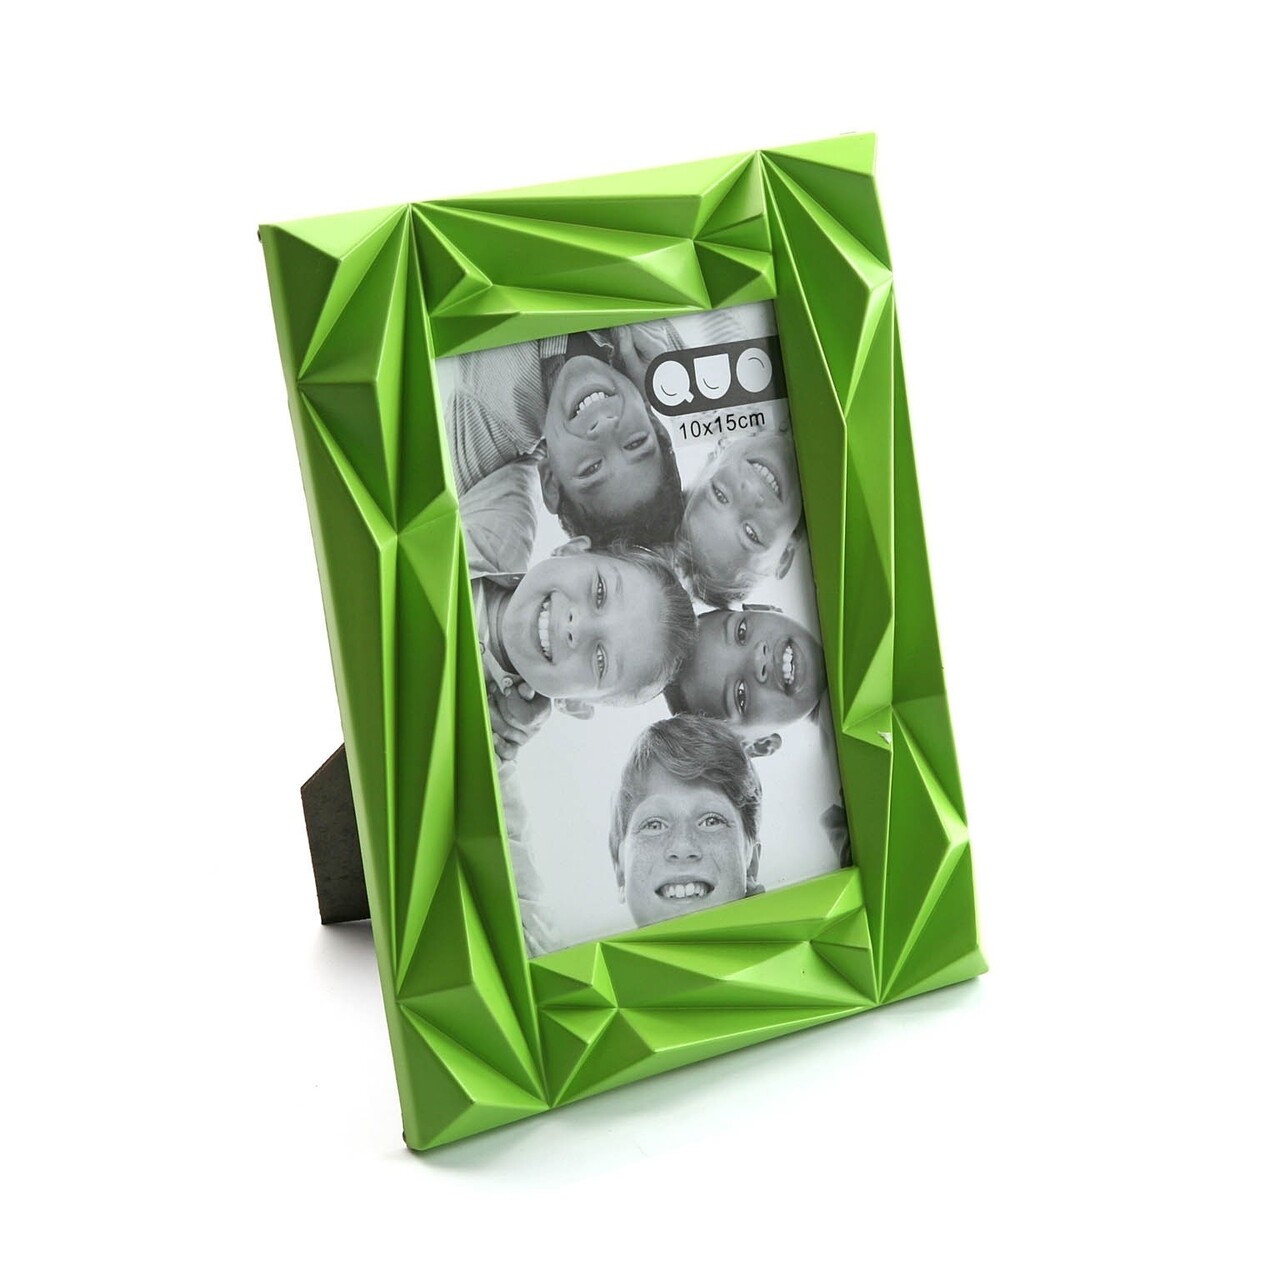 Insua képkeret, Versa, 10x15 cm, műanyag, zöld